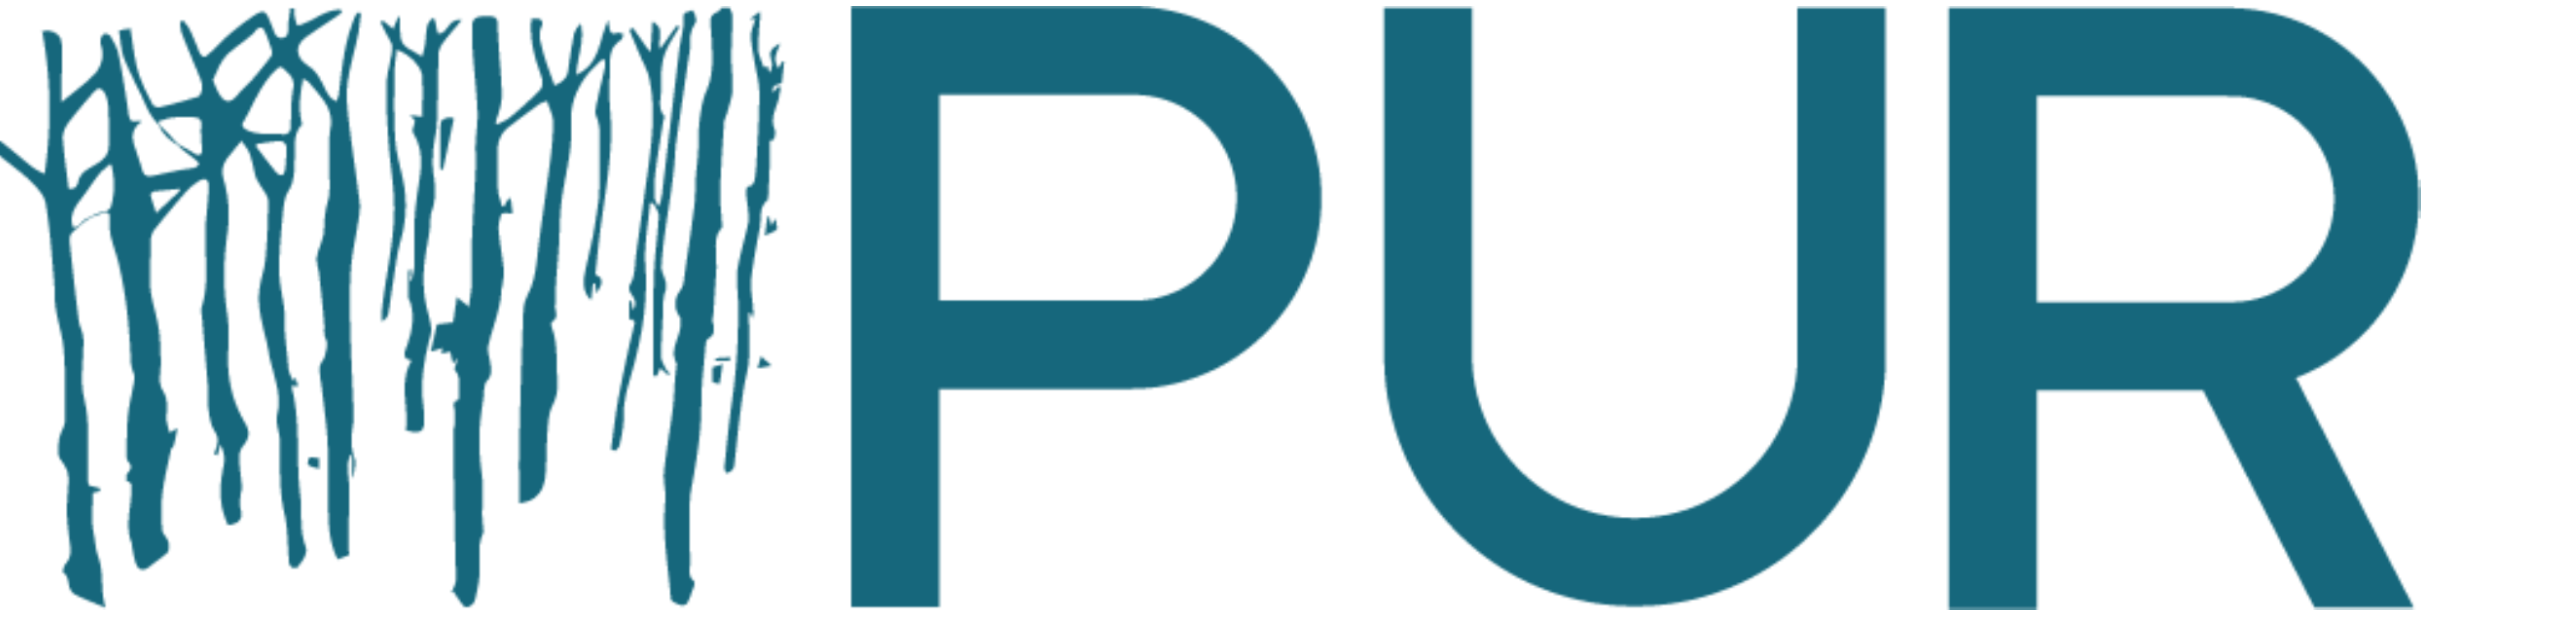 Pur Projet logo